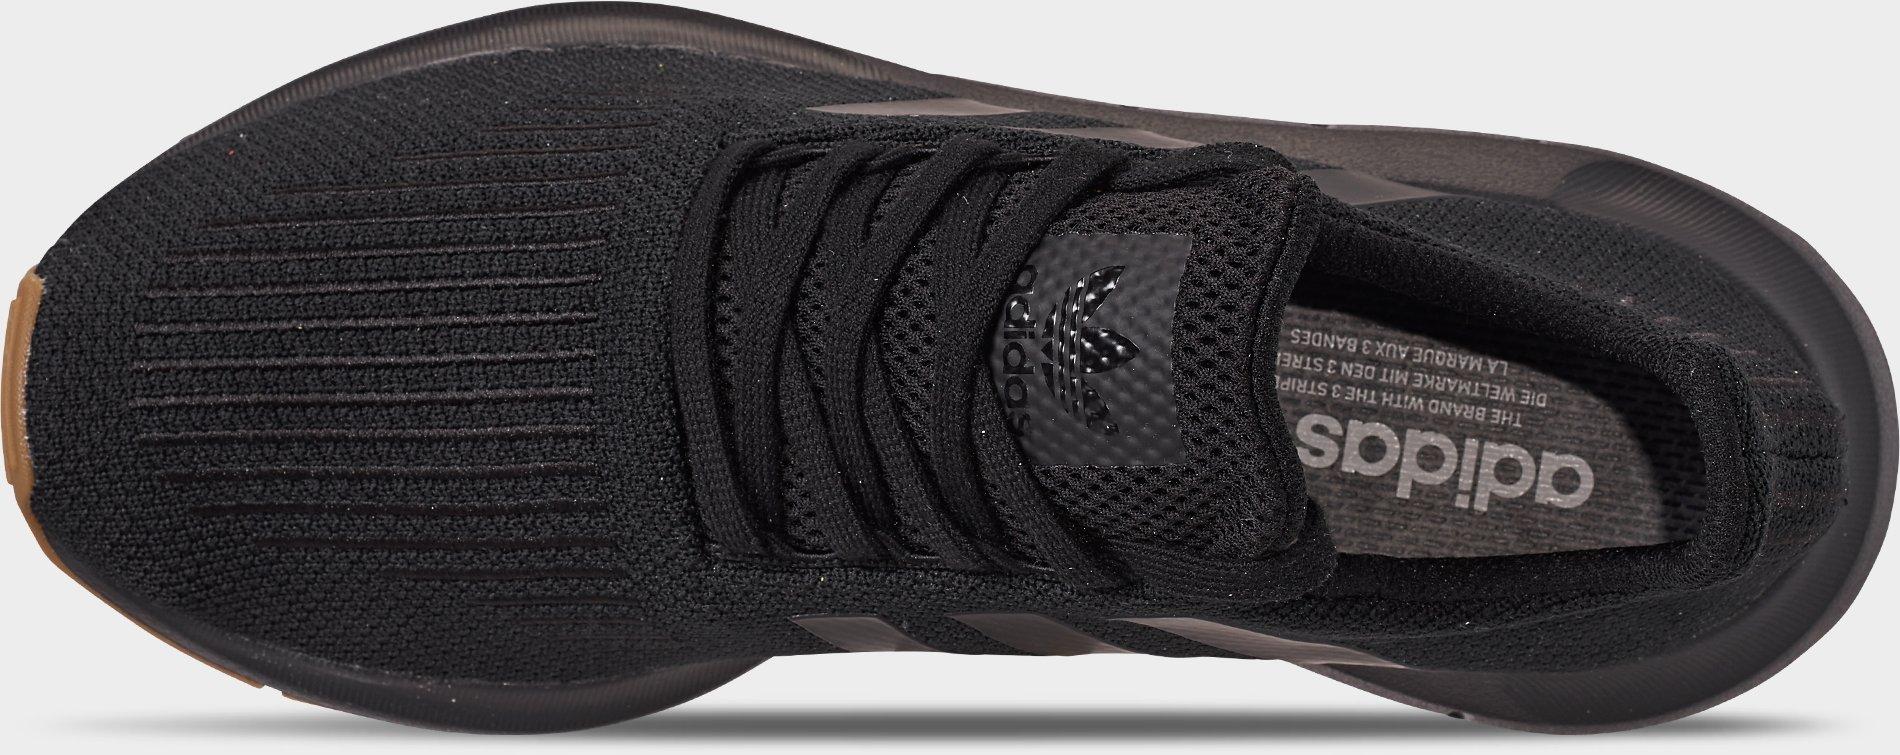 adidas swift run black and grey